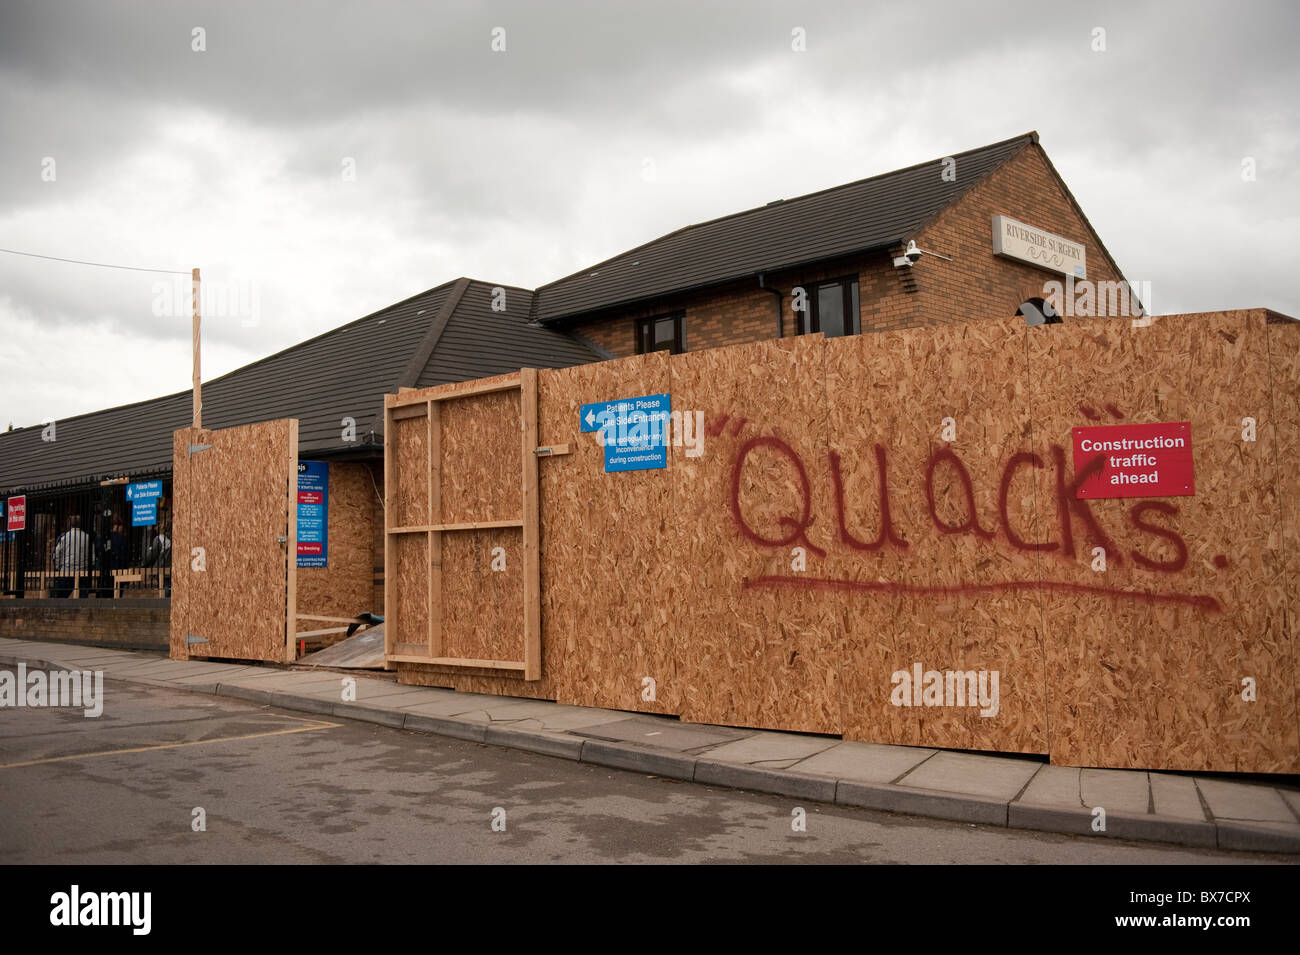 Graffiti on Construction Site Boarding Doctors Quacks Stock Photo